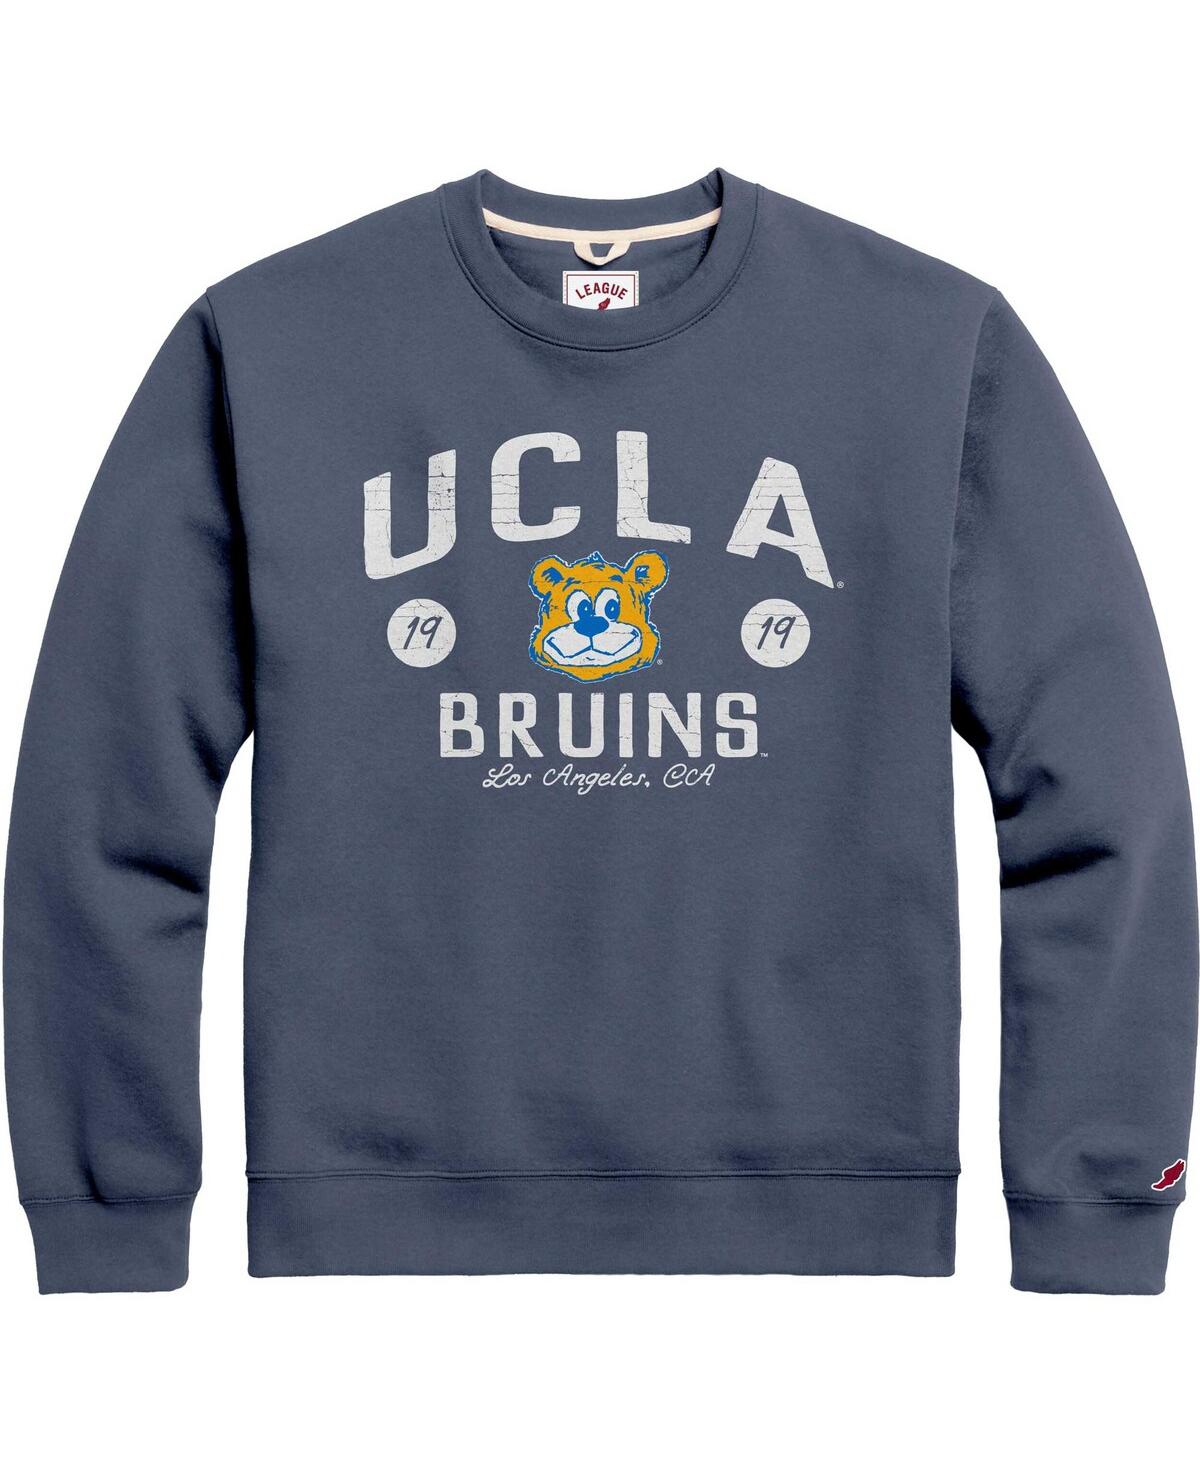 League Collegiate Wear Men's  Navy Distressed Ucla Bruins Bendy Arch Essential Pullover Sweatshirt